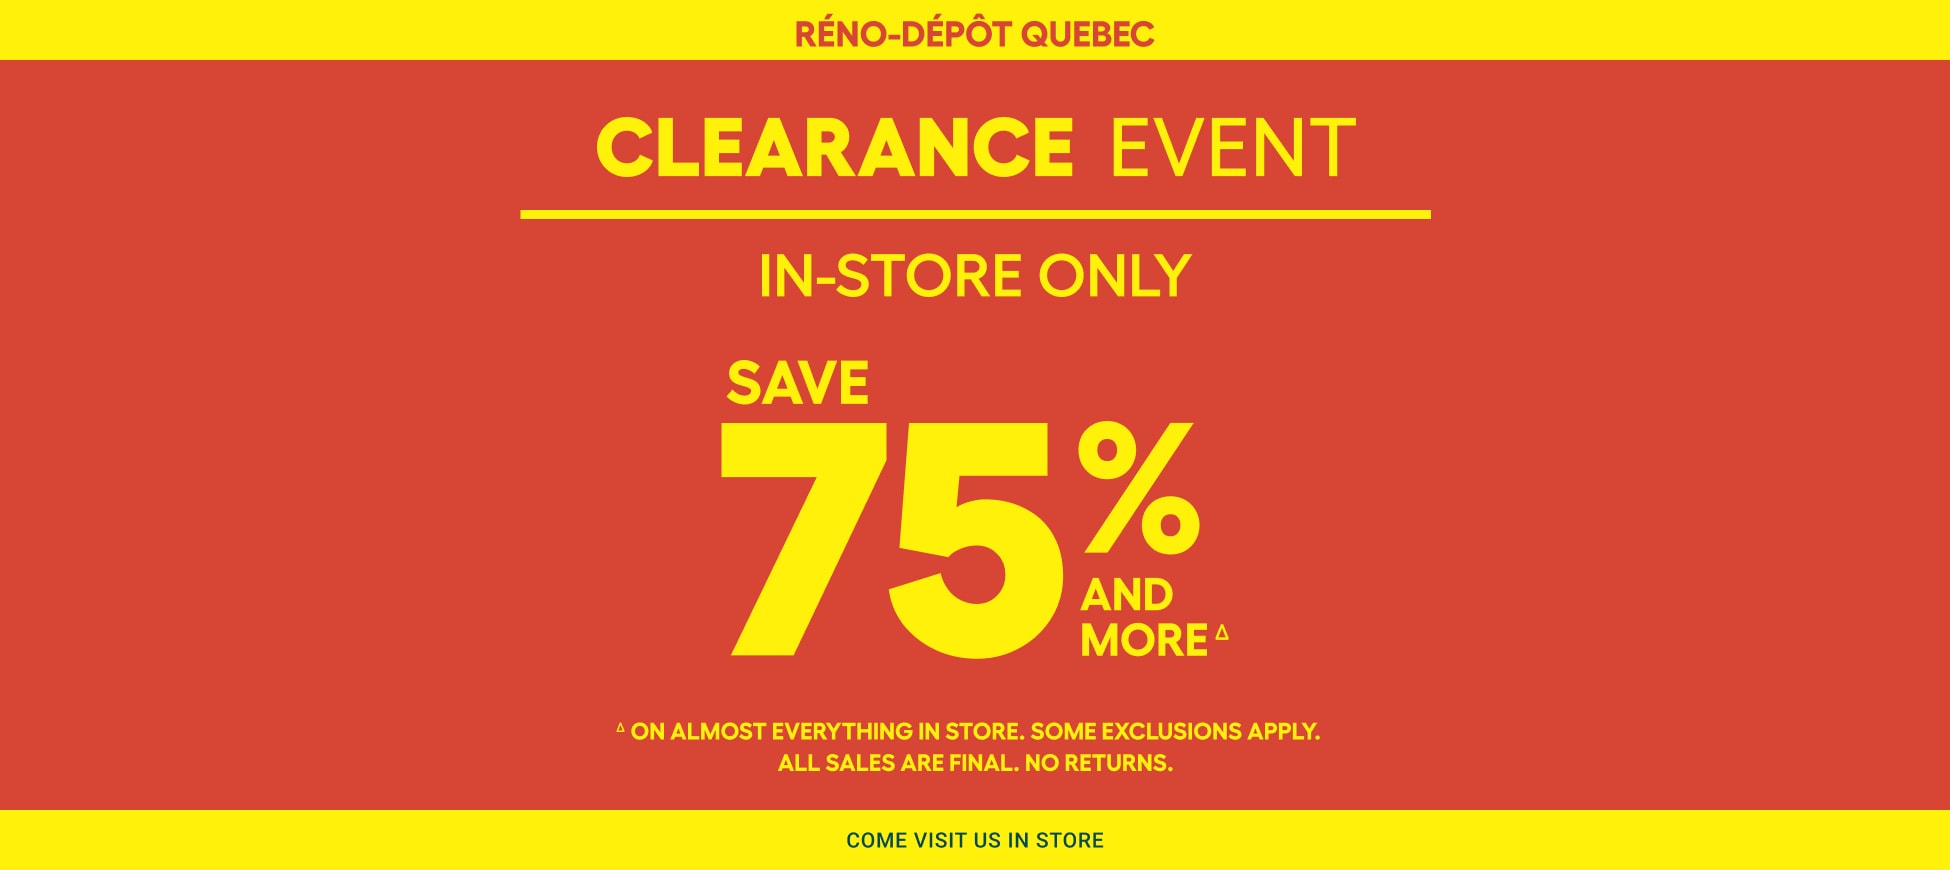 Clearance Reno-Depot Quebec